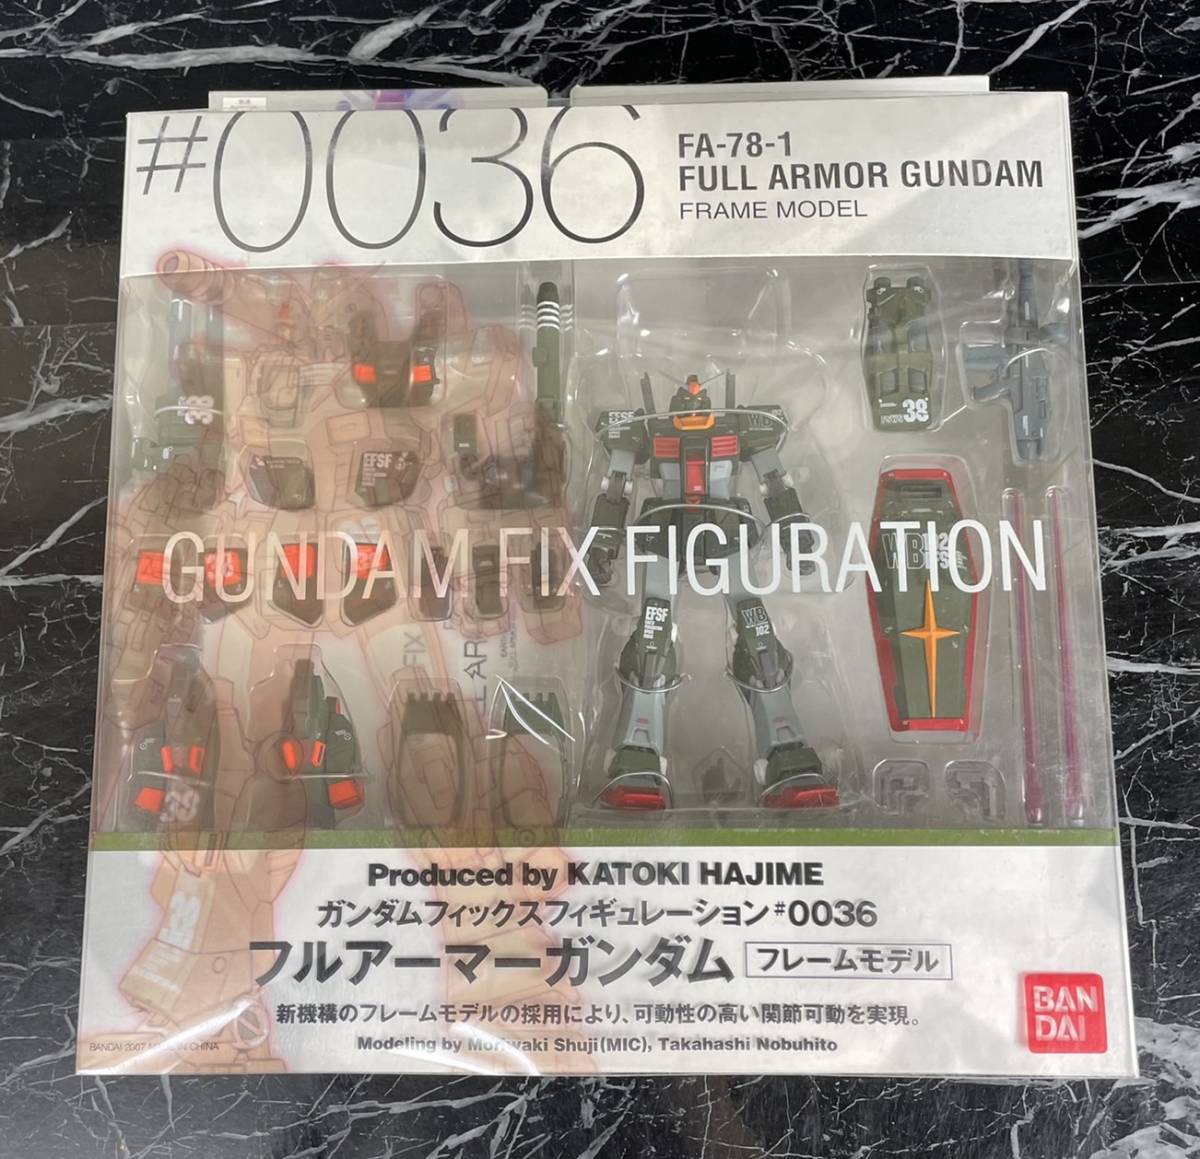 GUNDAM FIX FIGURATION #0001 FA-78-1 FULL ARMOR GUNDAM Action Figure BANDAI Japan 